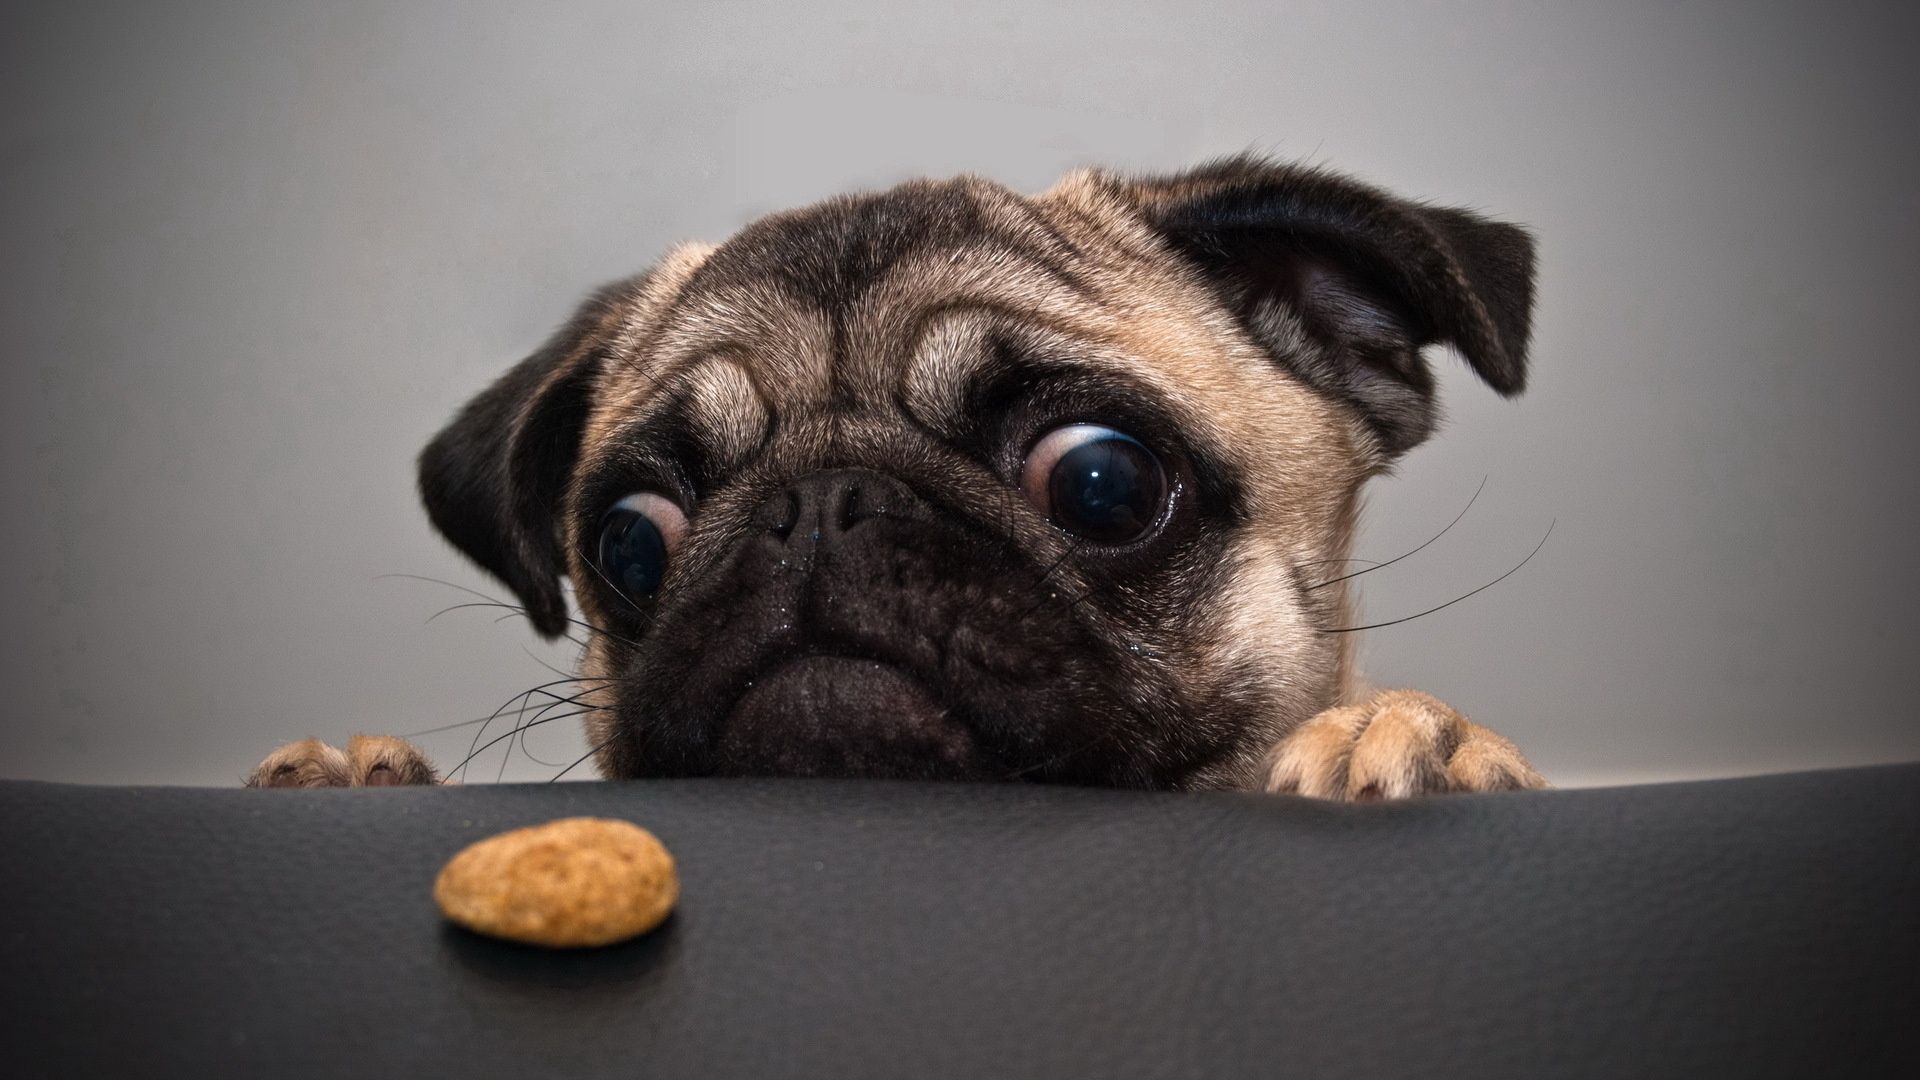 Download PC Wallpaper animals, cookies, dog, muzzle, sadness, sorrow, pug